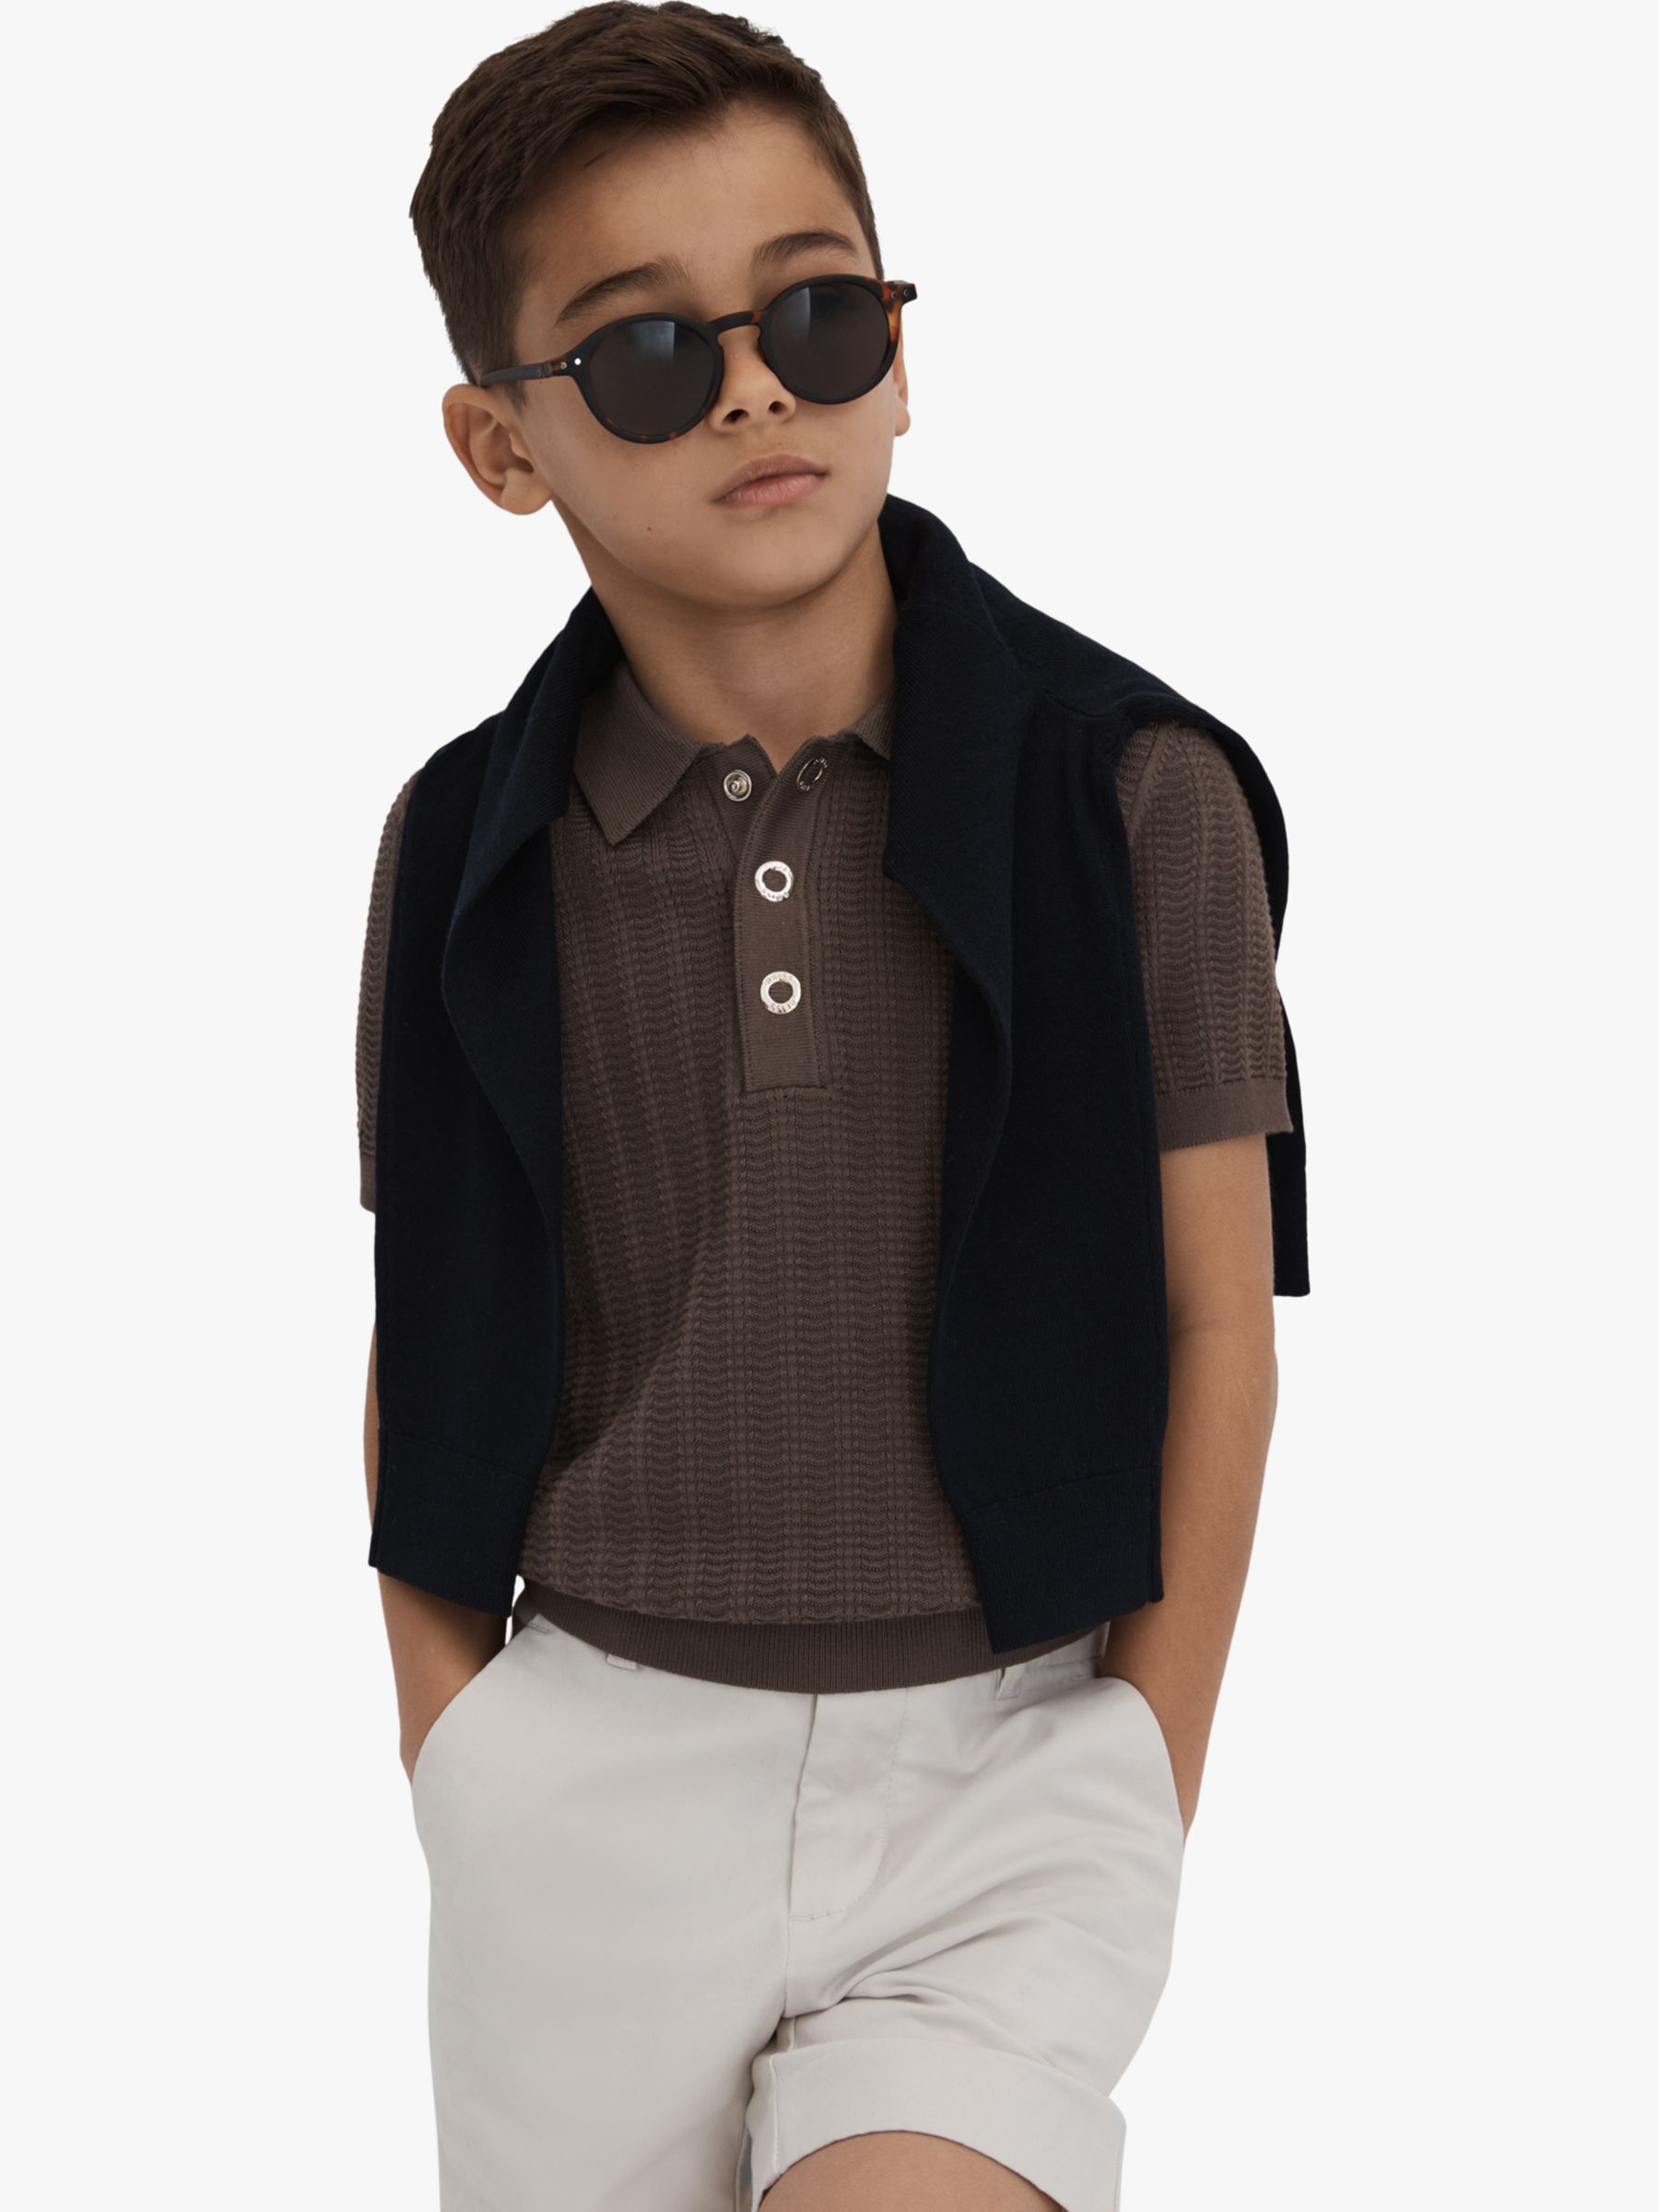 Buy Reiss Kids' Pascoe Textured Half Button Polo Shirt Online at johnlewis.com